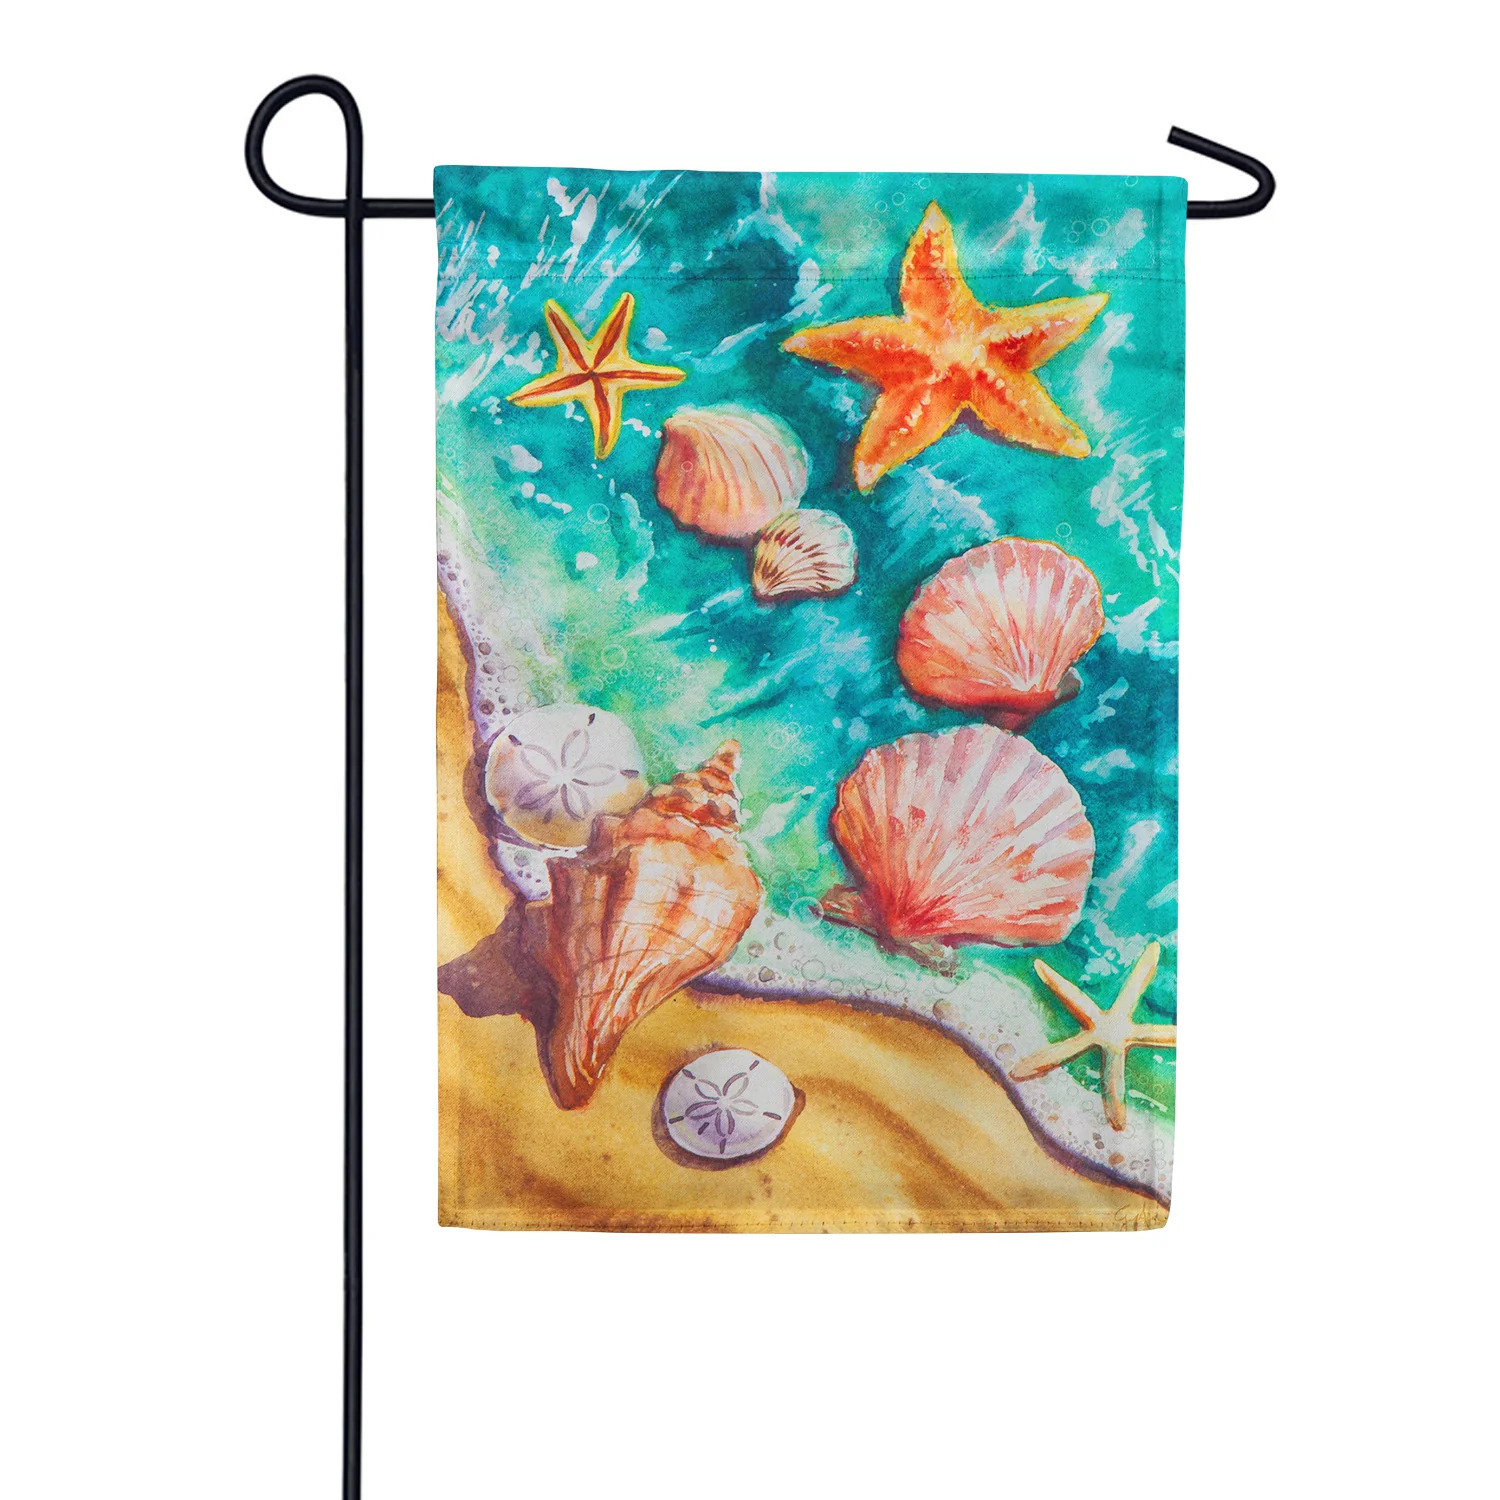 Coastal Beach Shells Suede Garden Flag-2 Sided Message,12.5" x 18" - $21.00